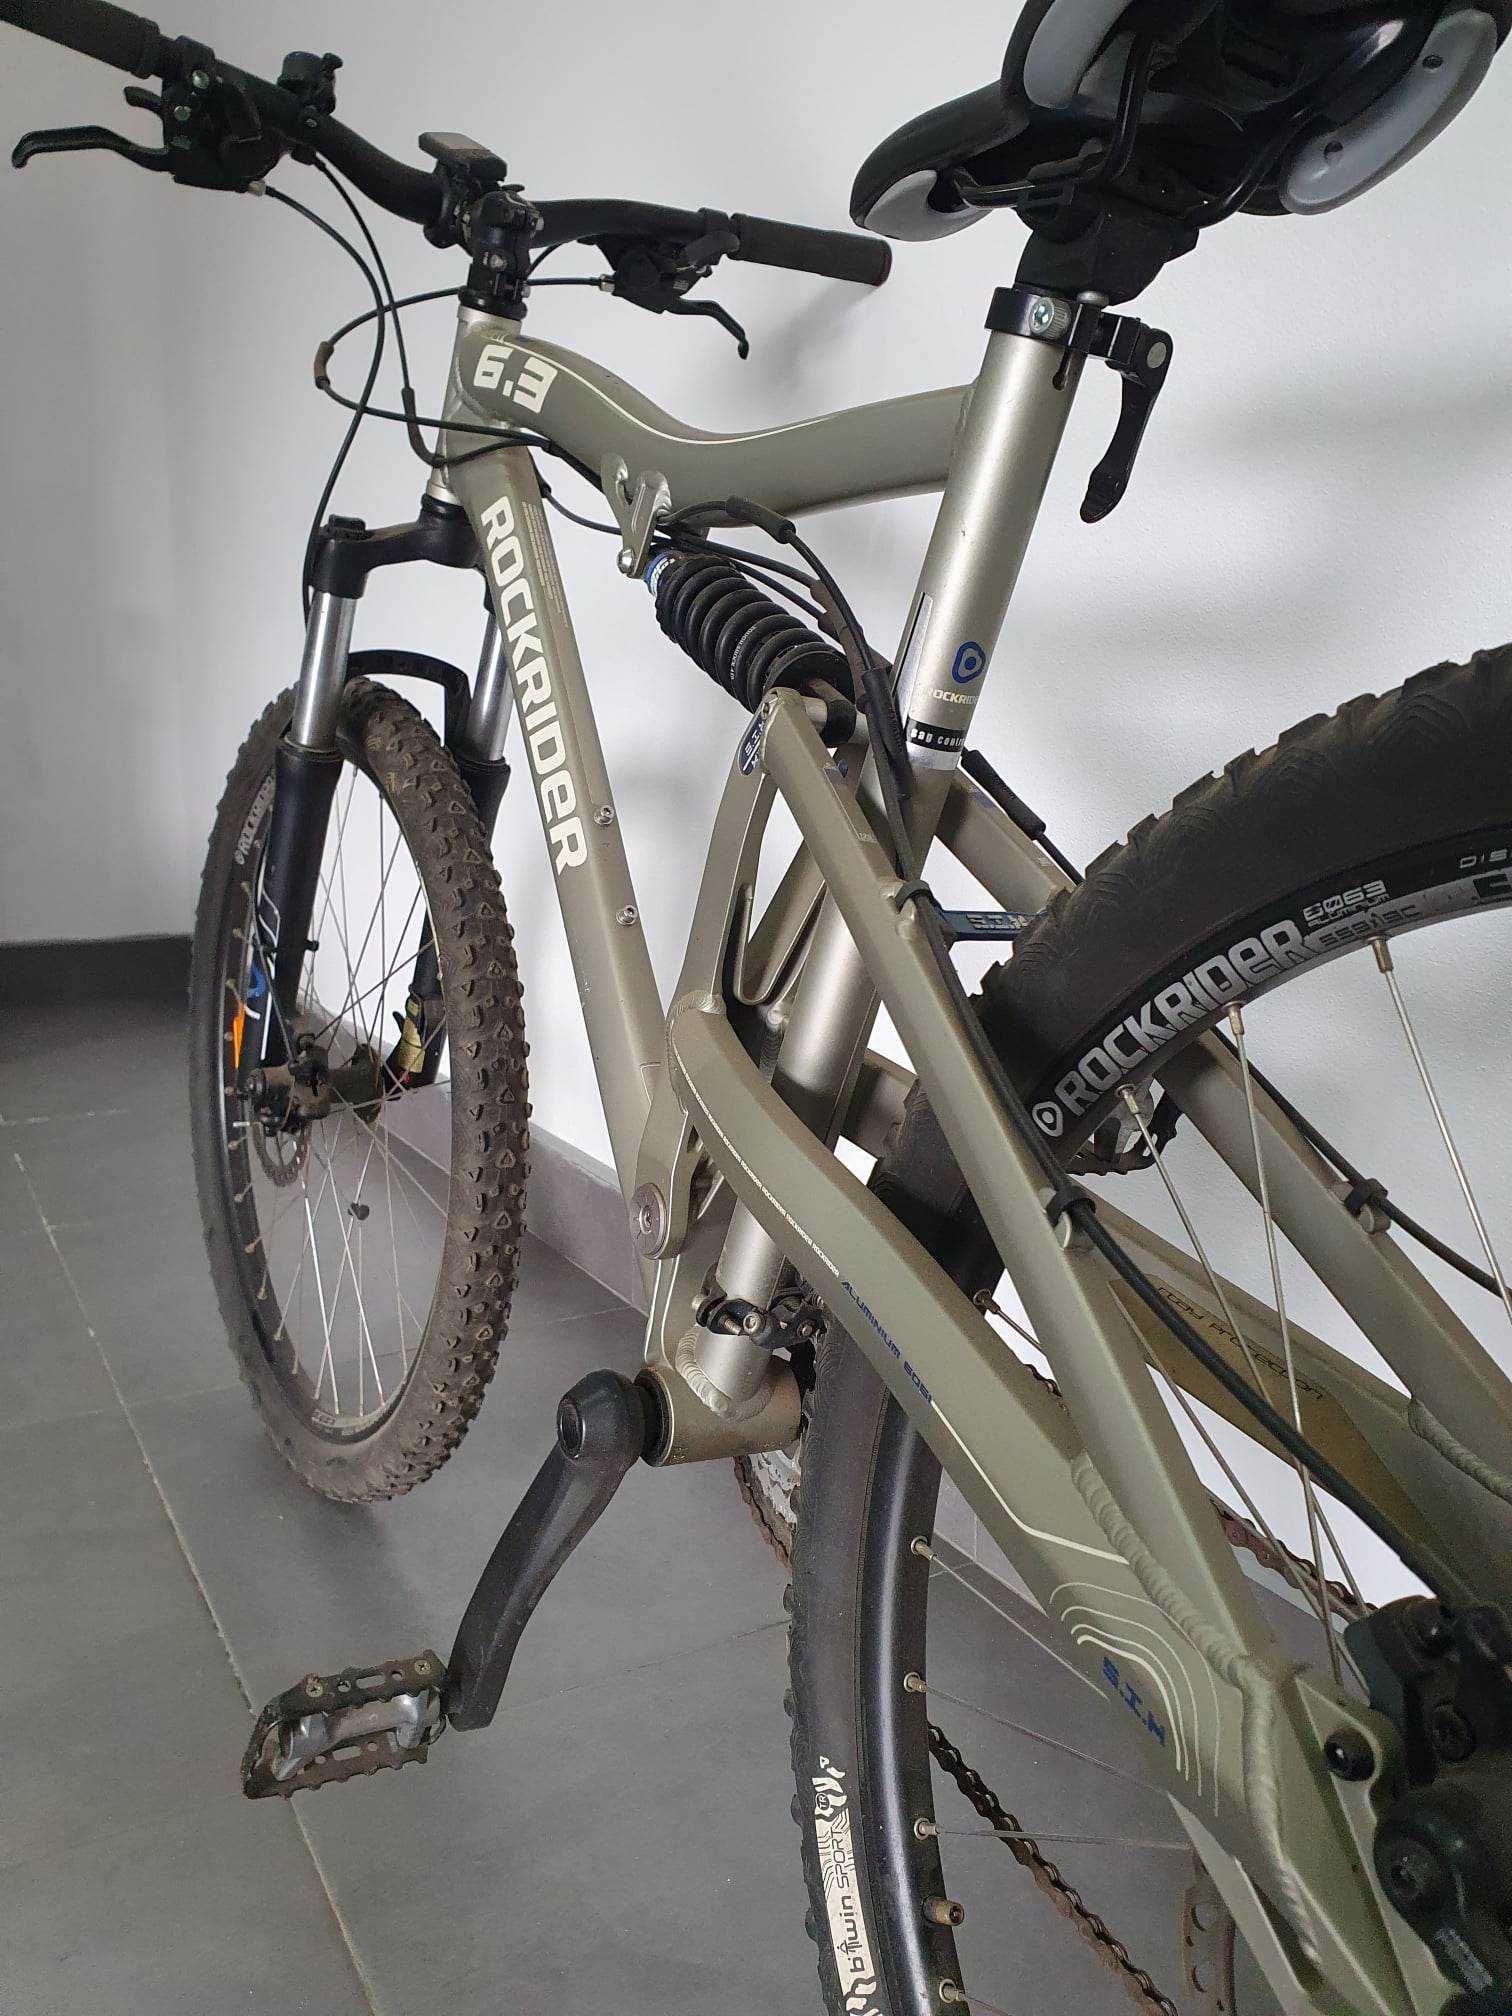 Bicicleta Rock Rider 6.3 como nova